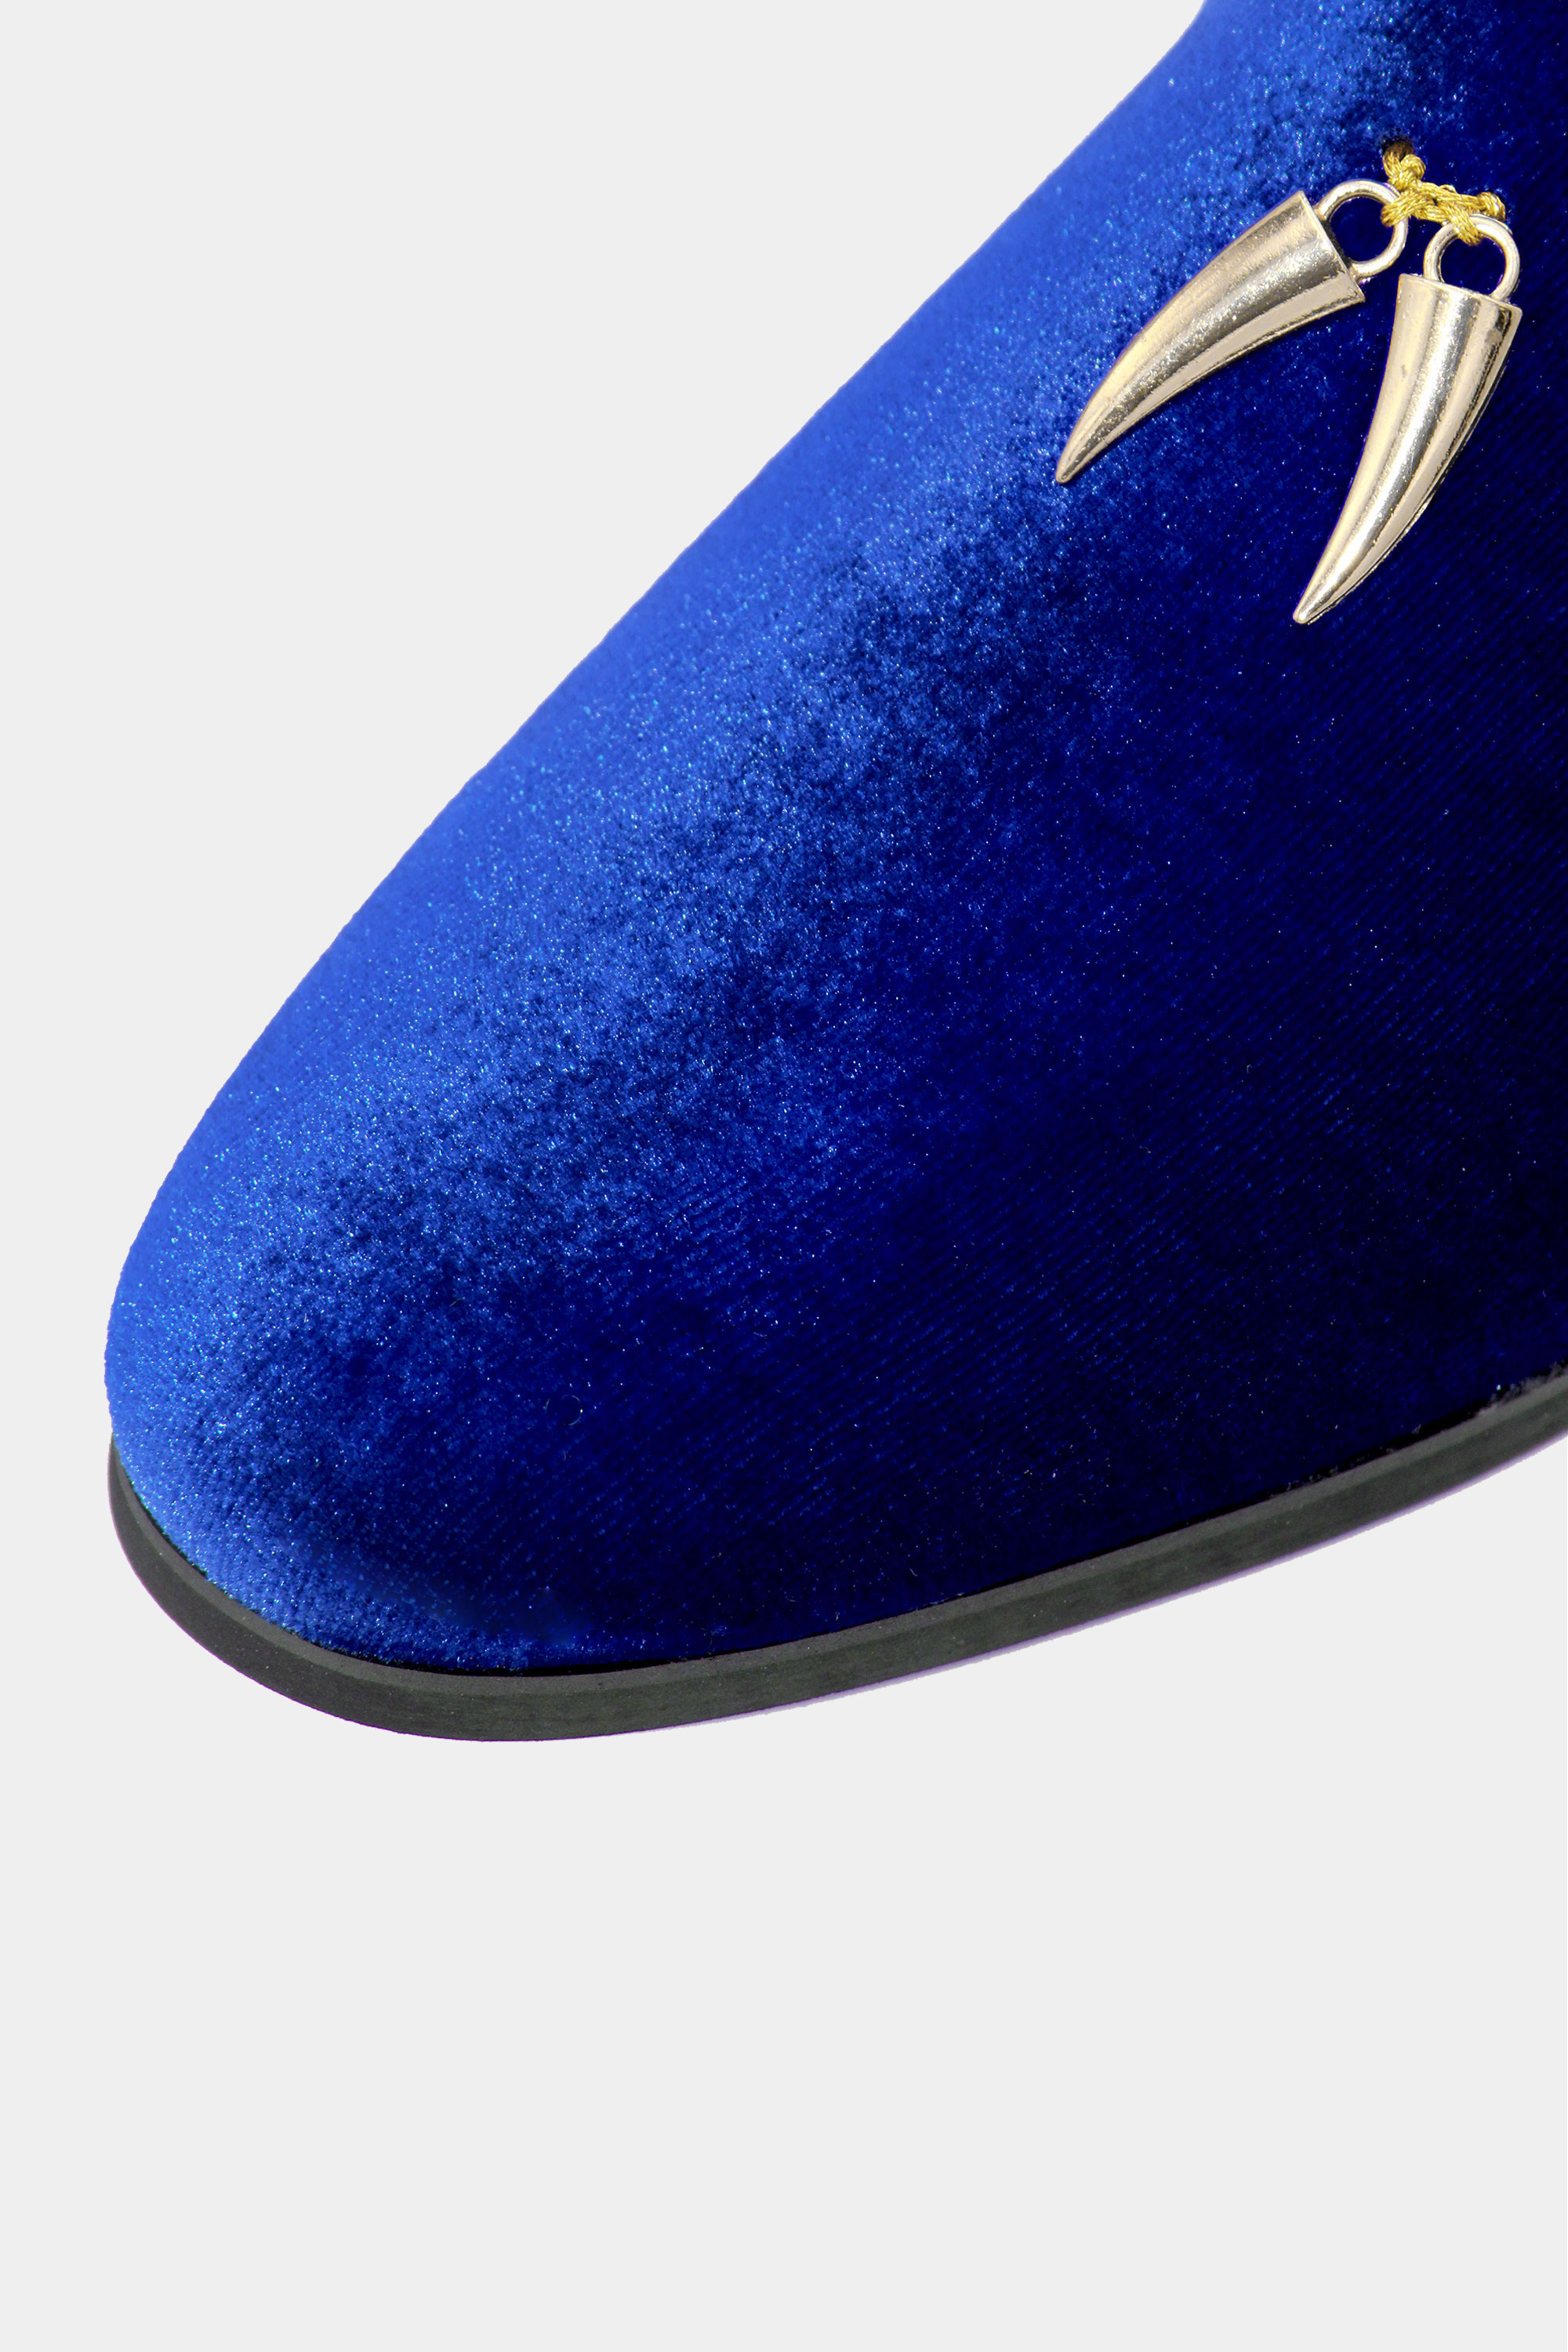 Royal-Blue-Velvet-Suede-Loafers-Shoes-from-Gentlemansguru.com